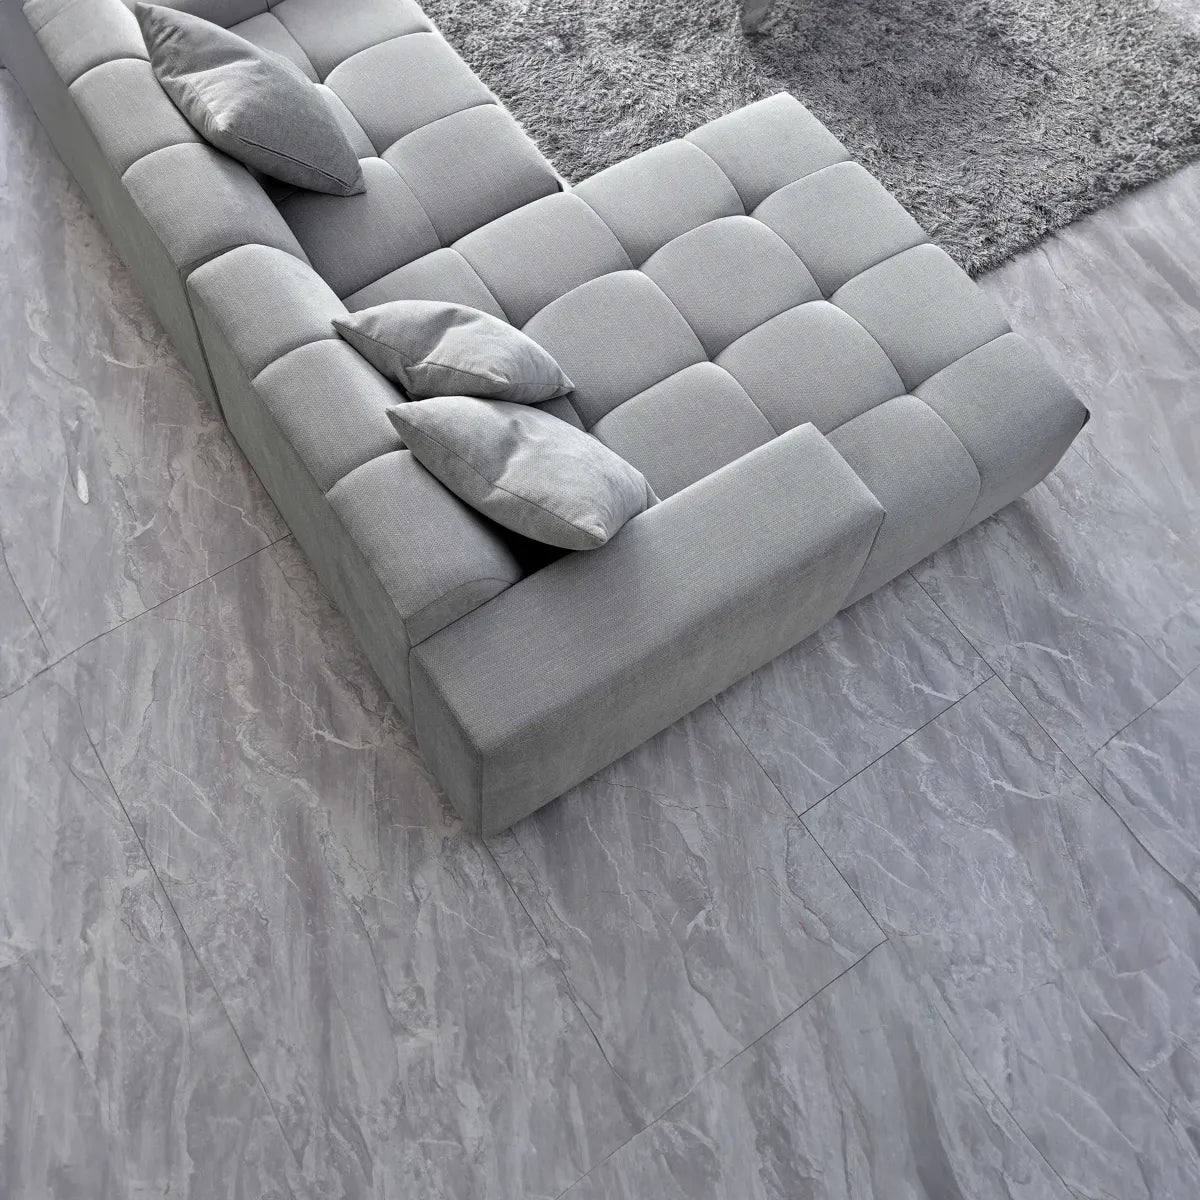 Leonard Left Hand Corner Boucle Sofa in Cloudy Grey